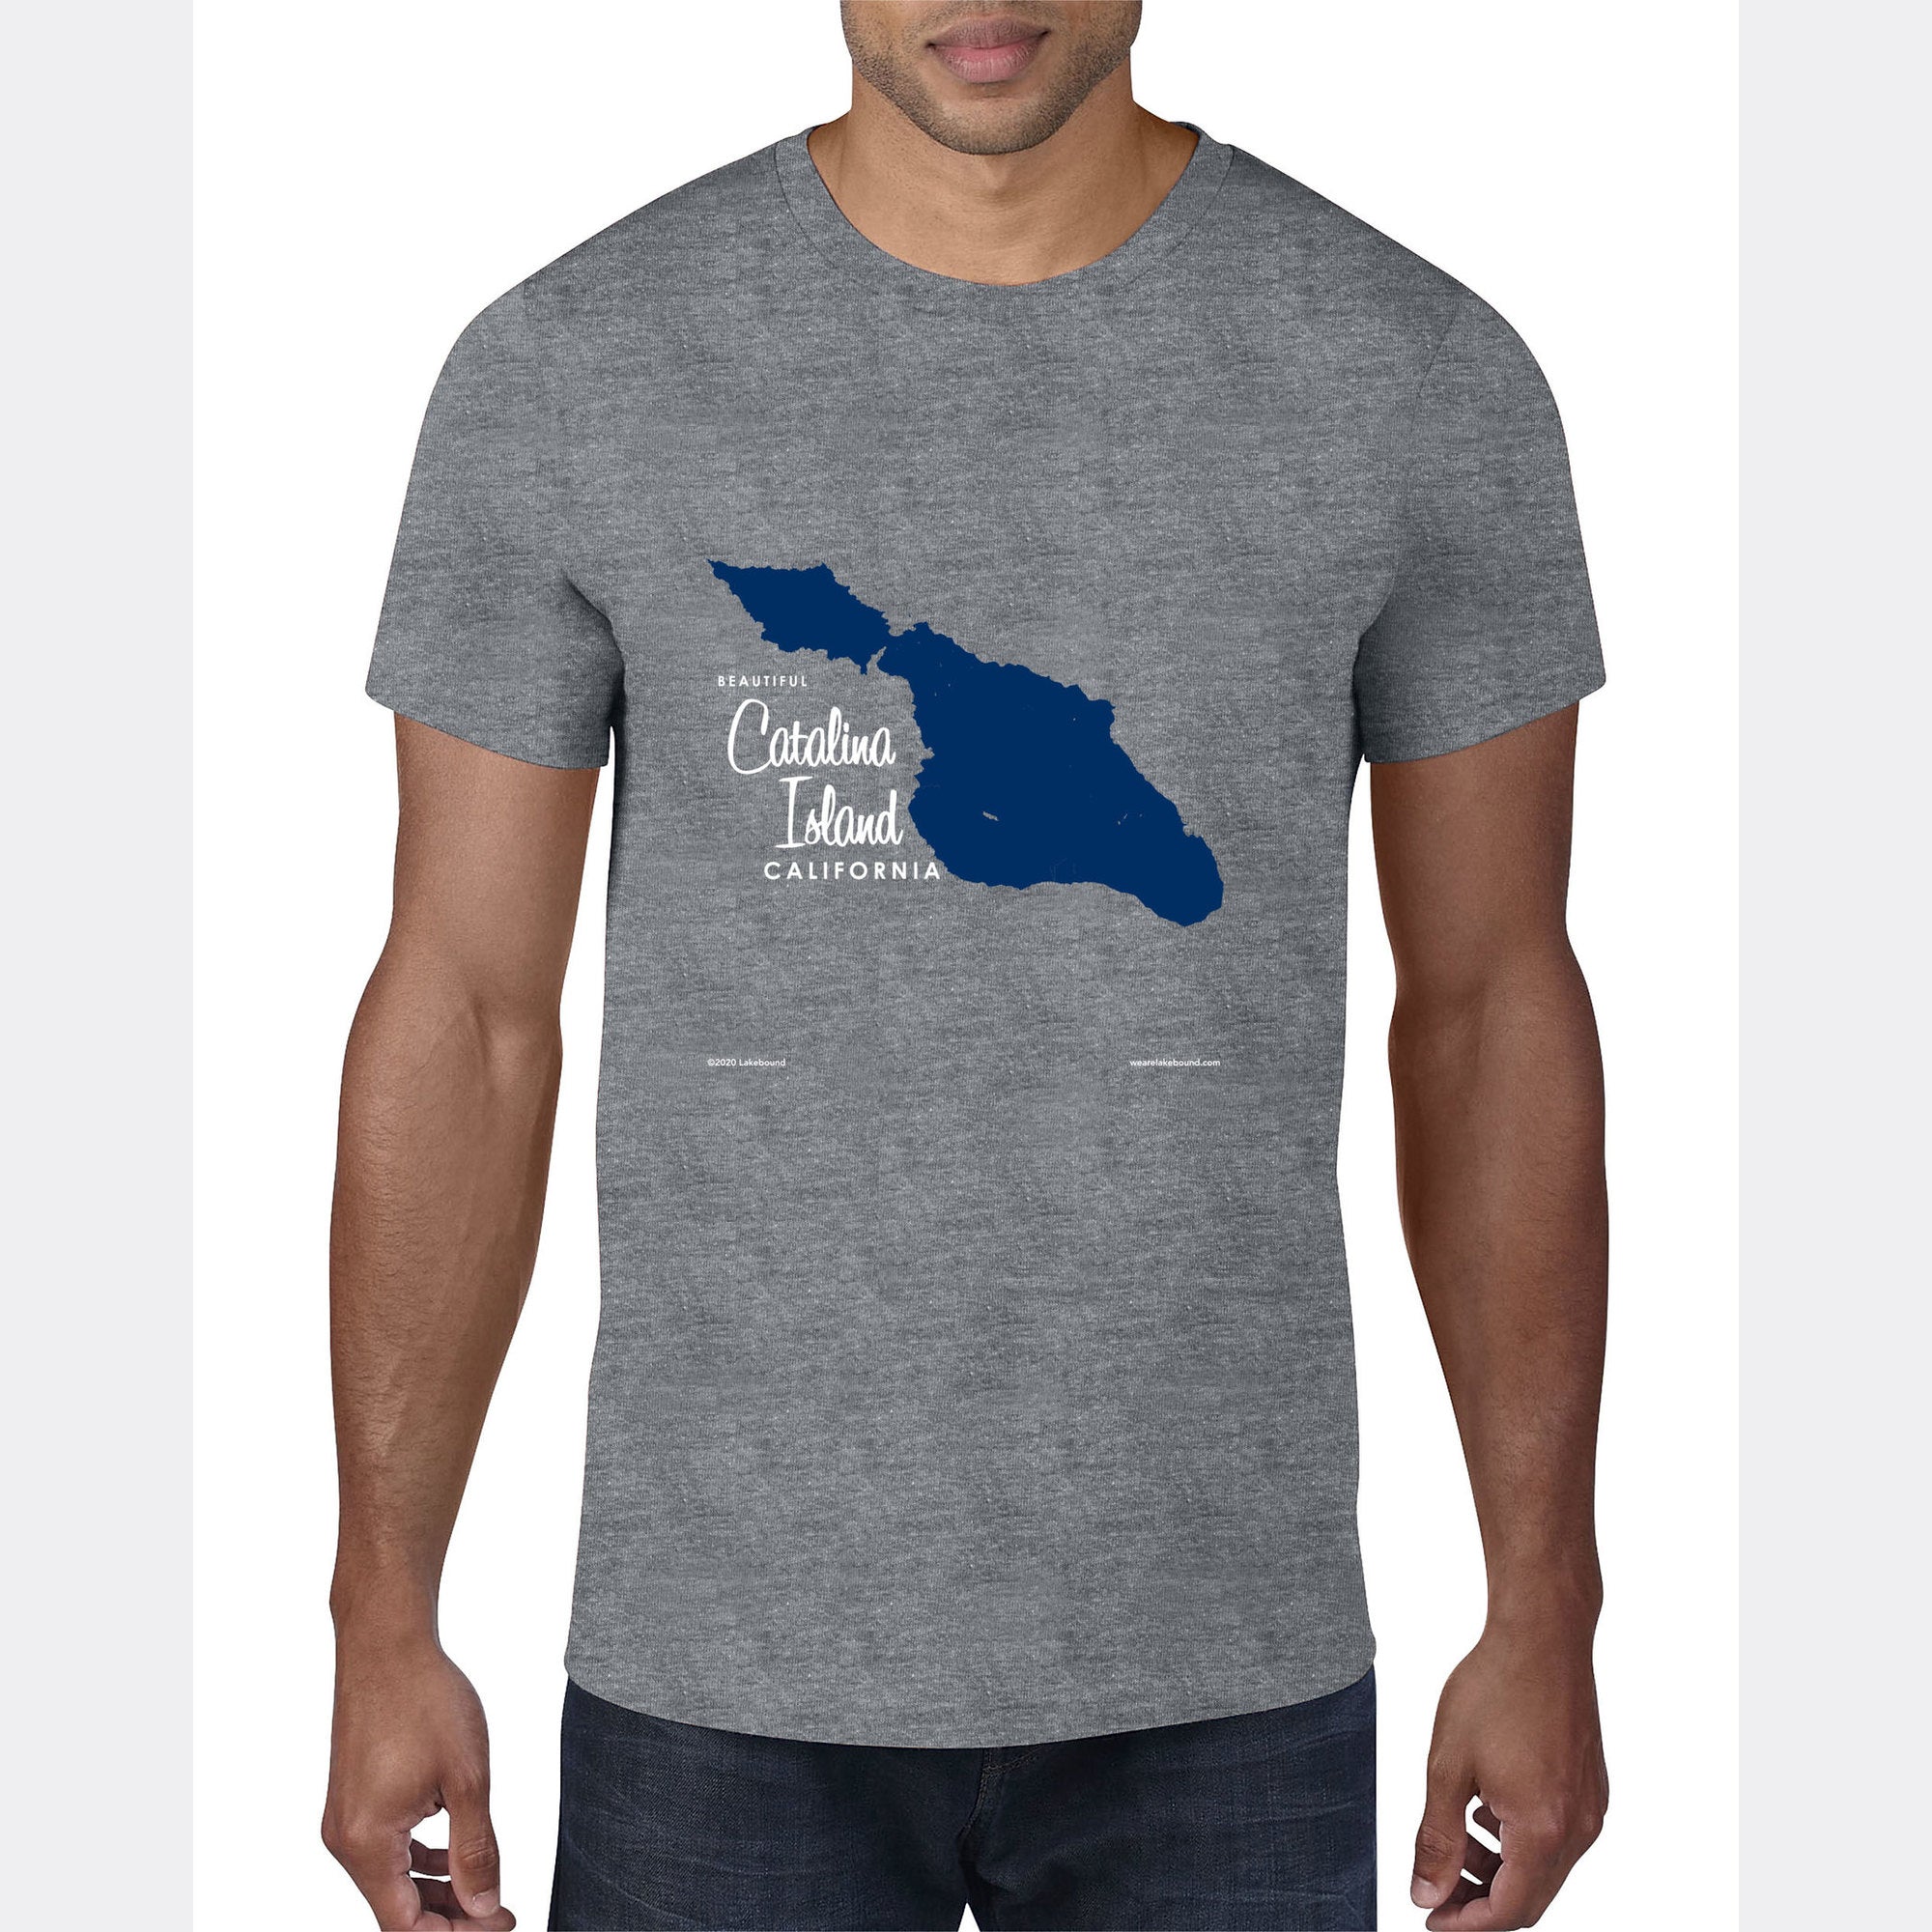 Catalina Island California, T-Shirt